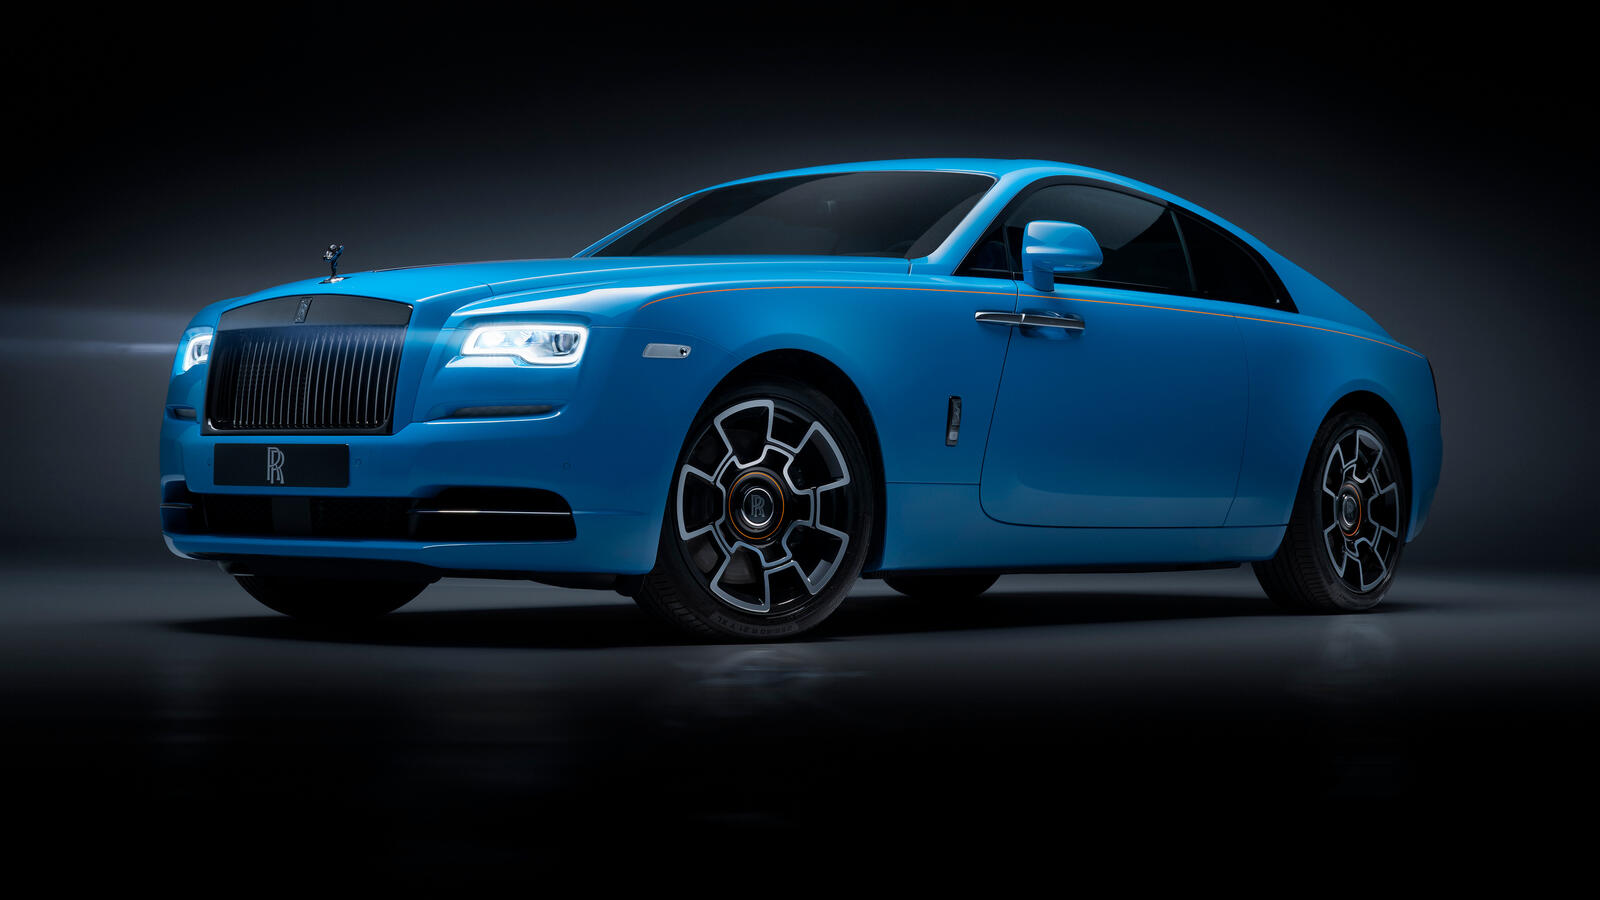 Free photo Rolls-Royce Wraith Black Badge 2019 in blue